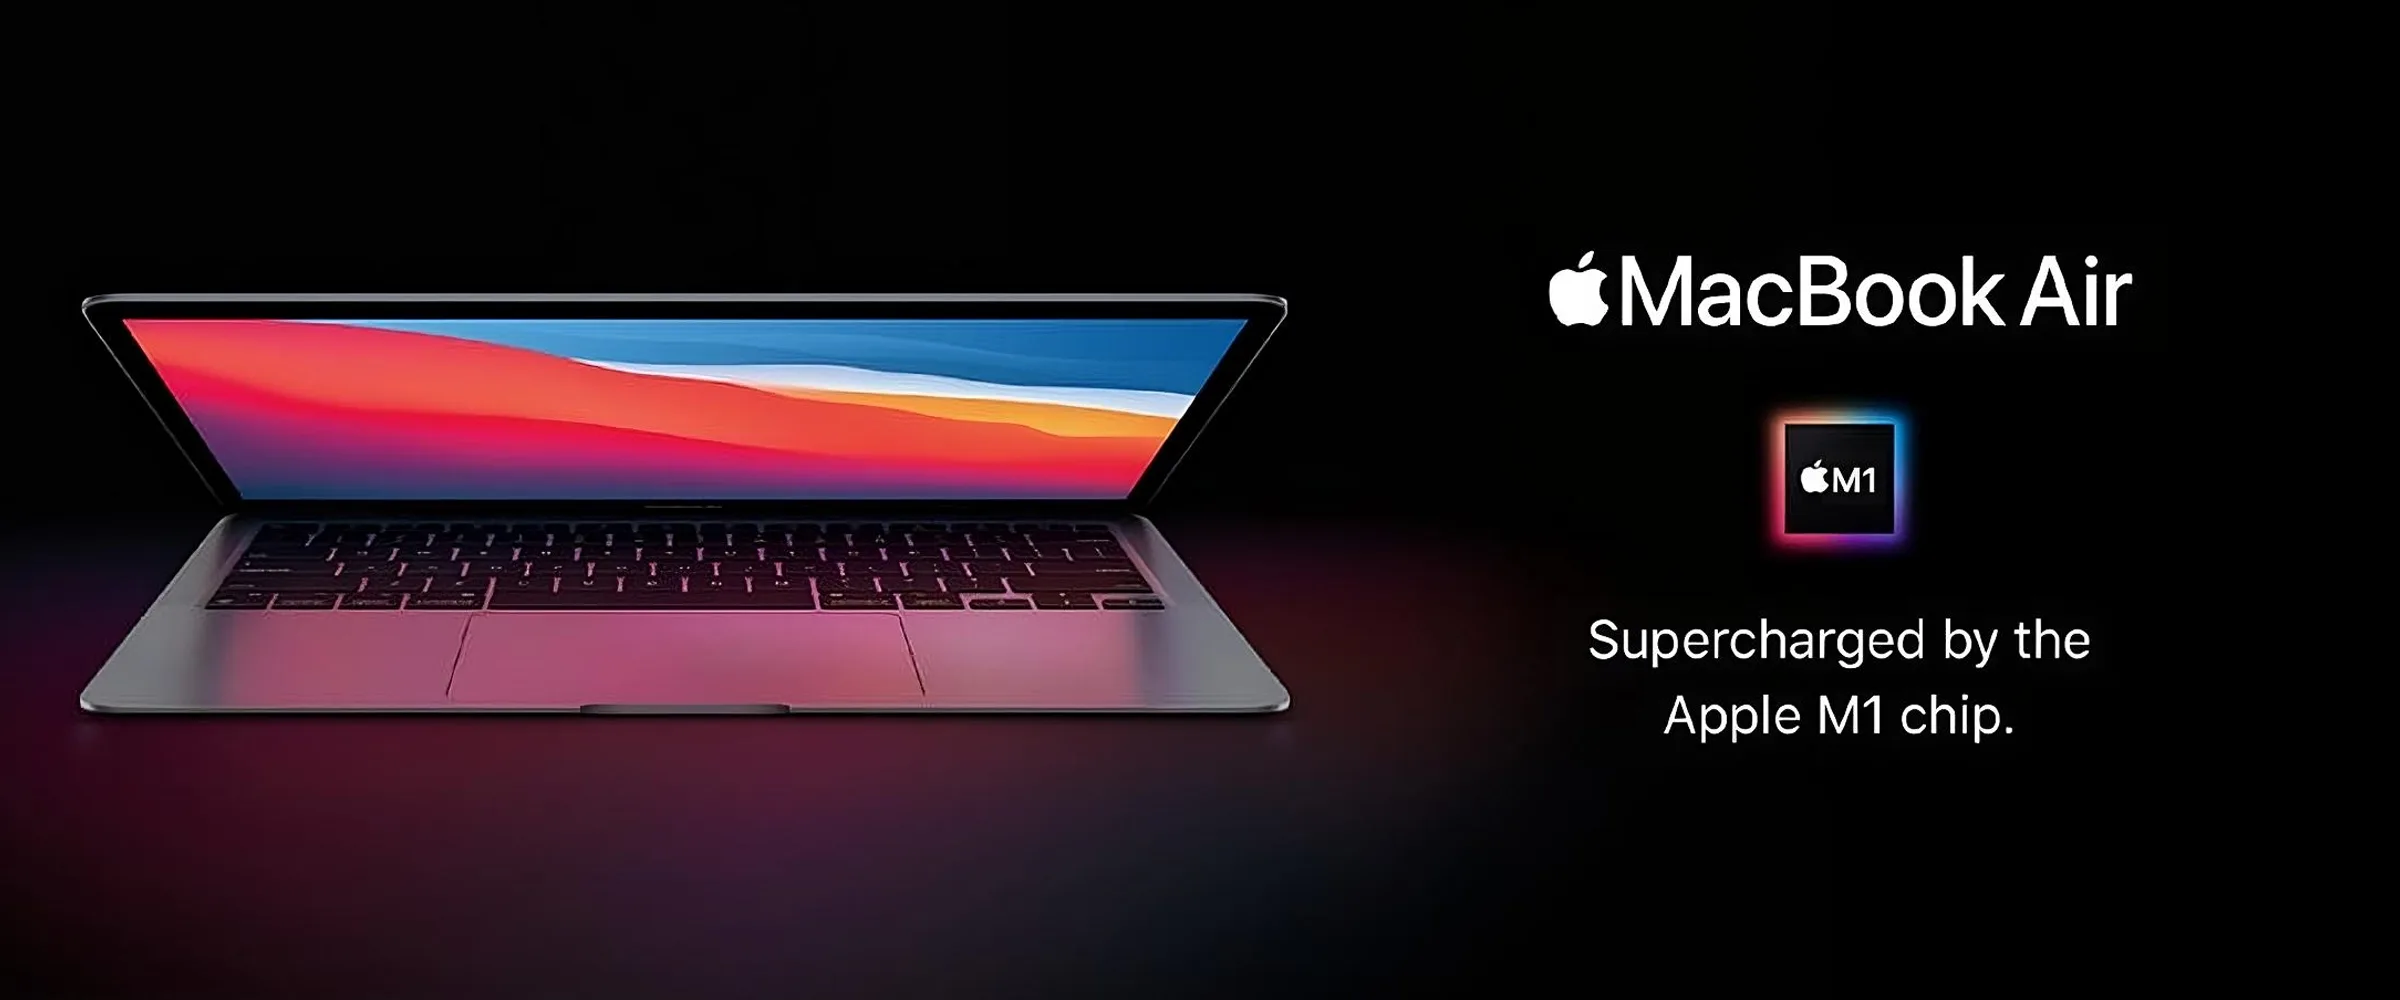 Macbook Air Banner Website